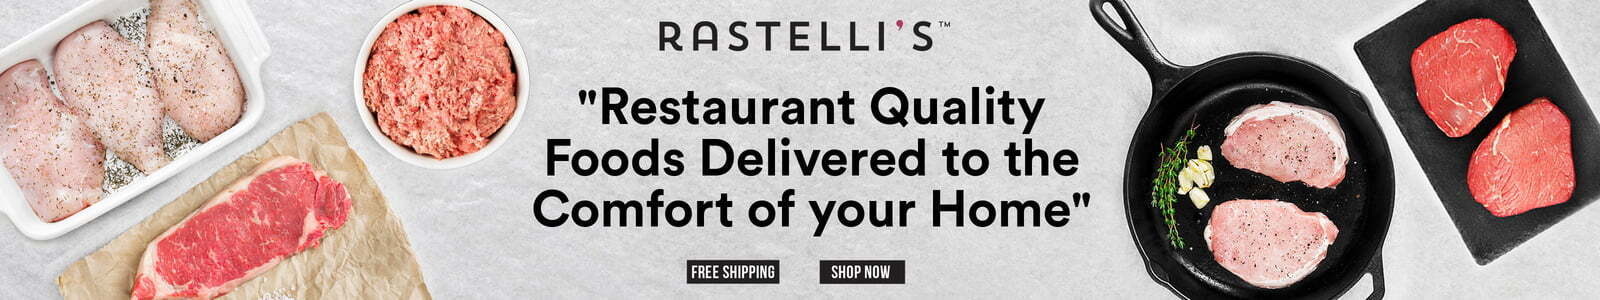 Ratelli's Restaurant Quality Foods Delivered